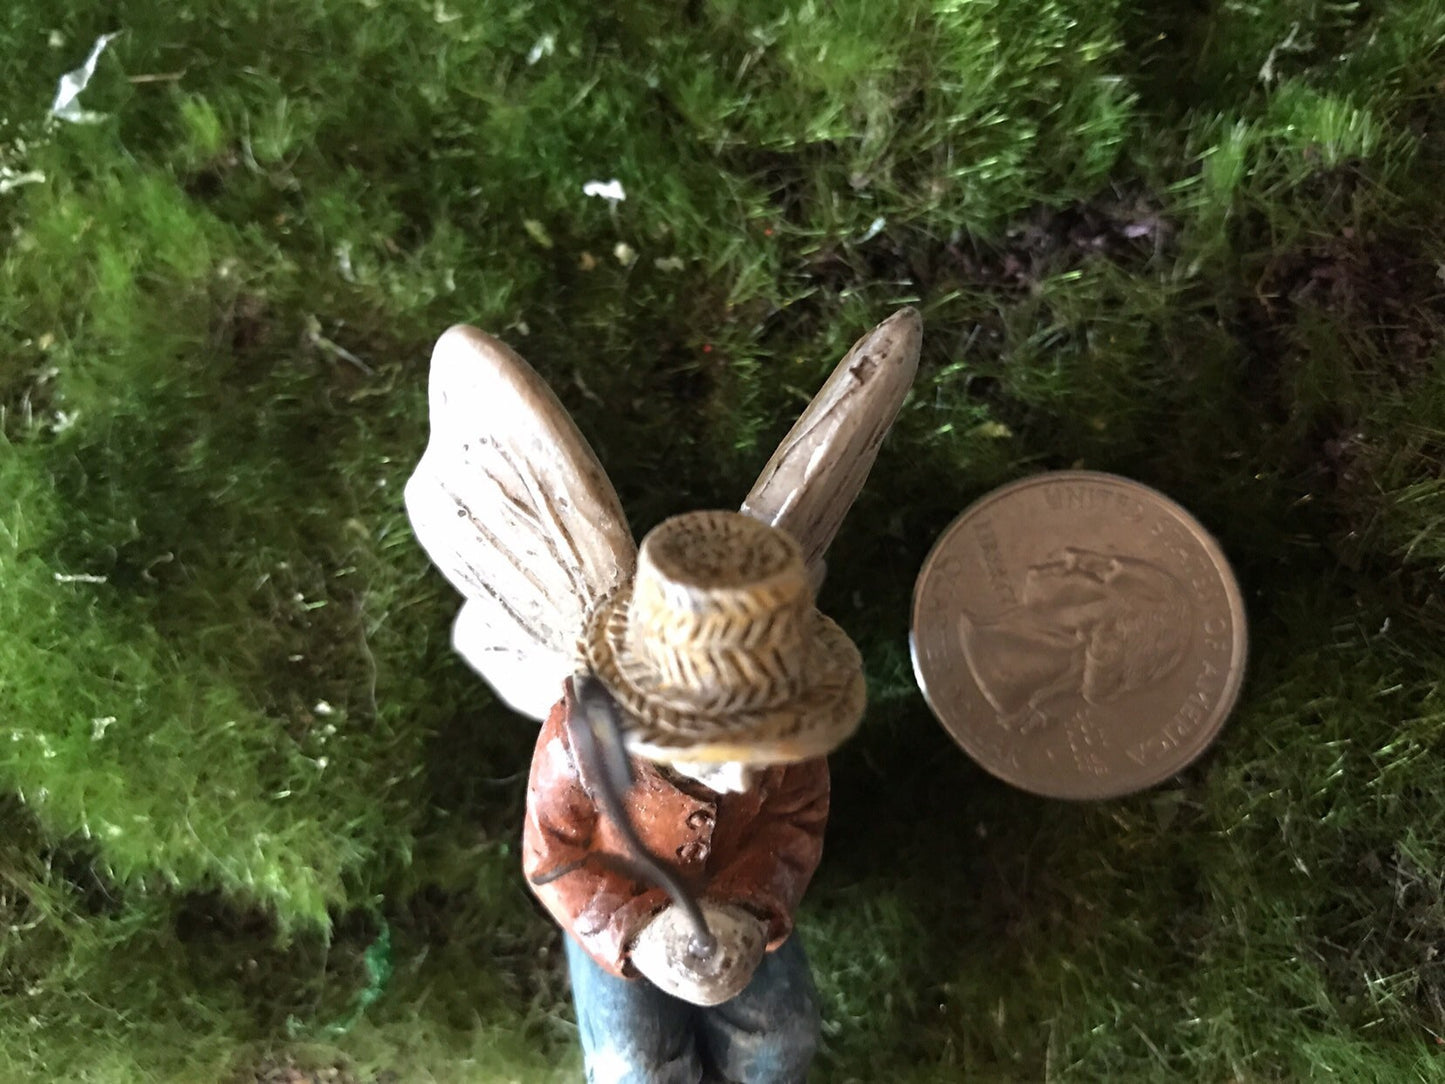 Fairy boy figurine with fishing pole